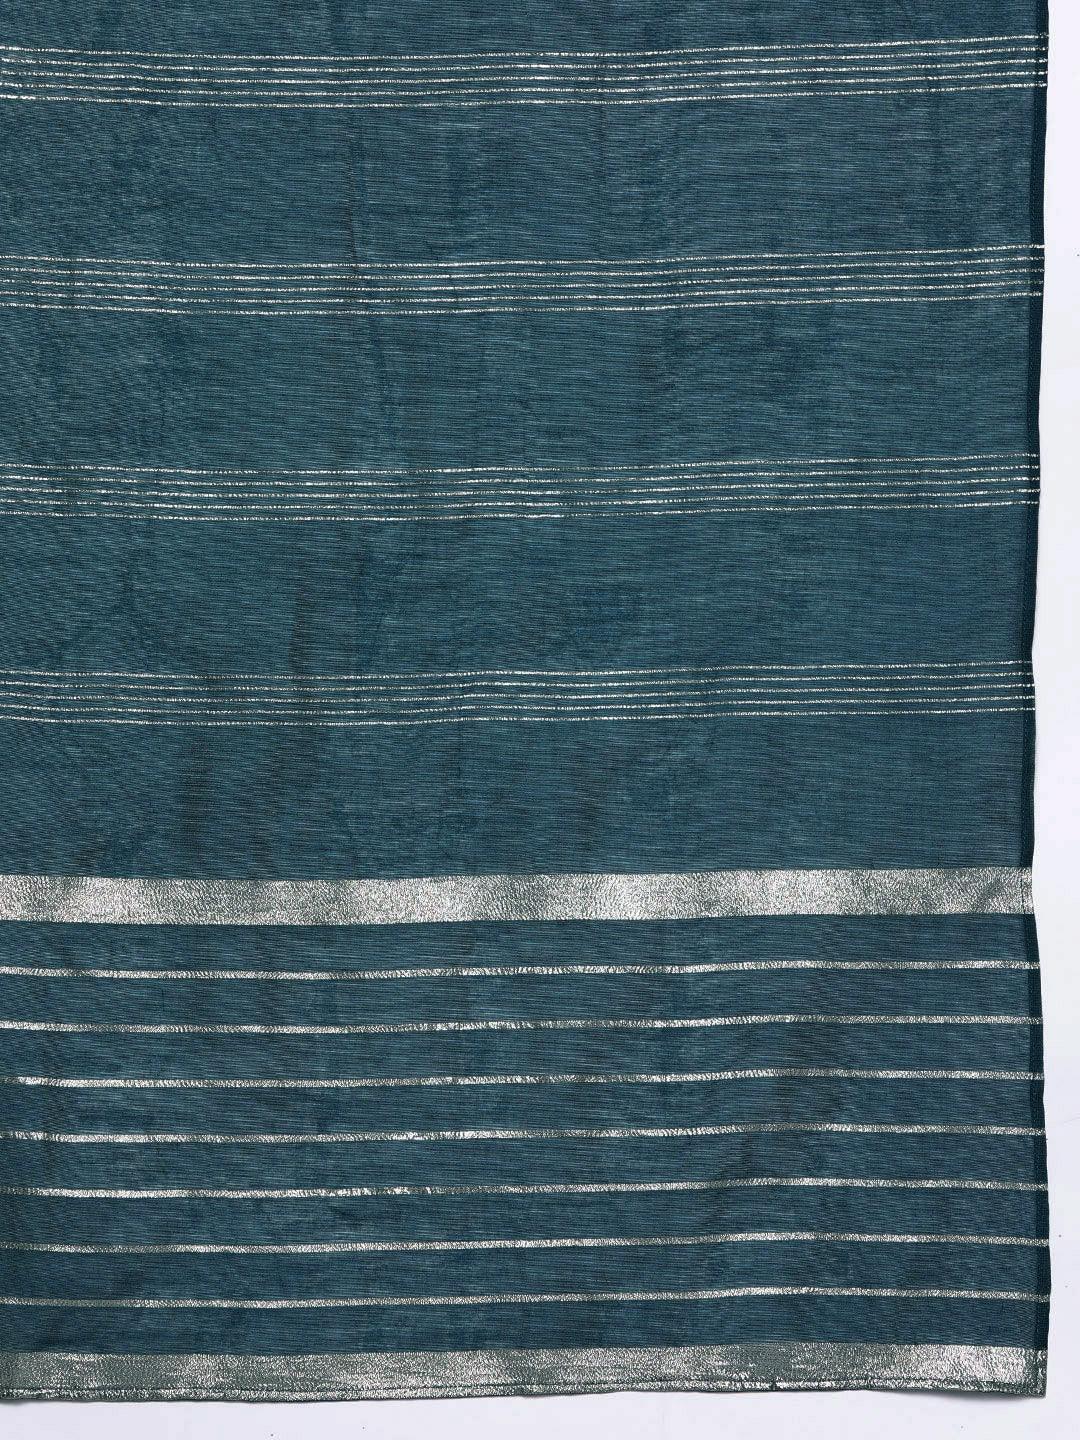 Teal Printed Silk Blend Straight Kurta With Salwar & Dupatta - Libas